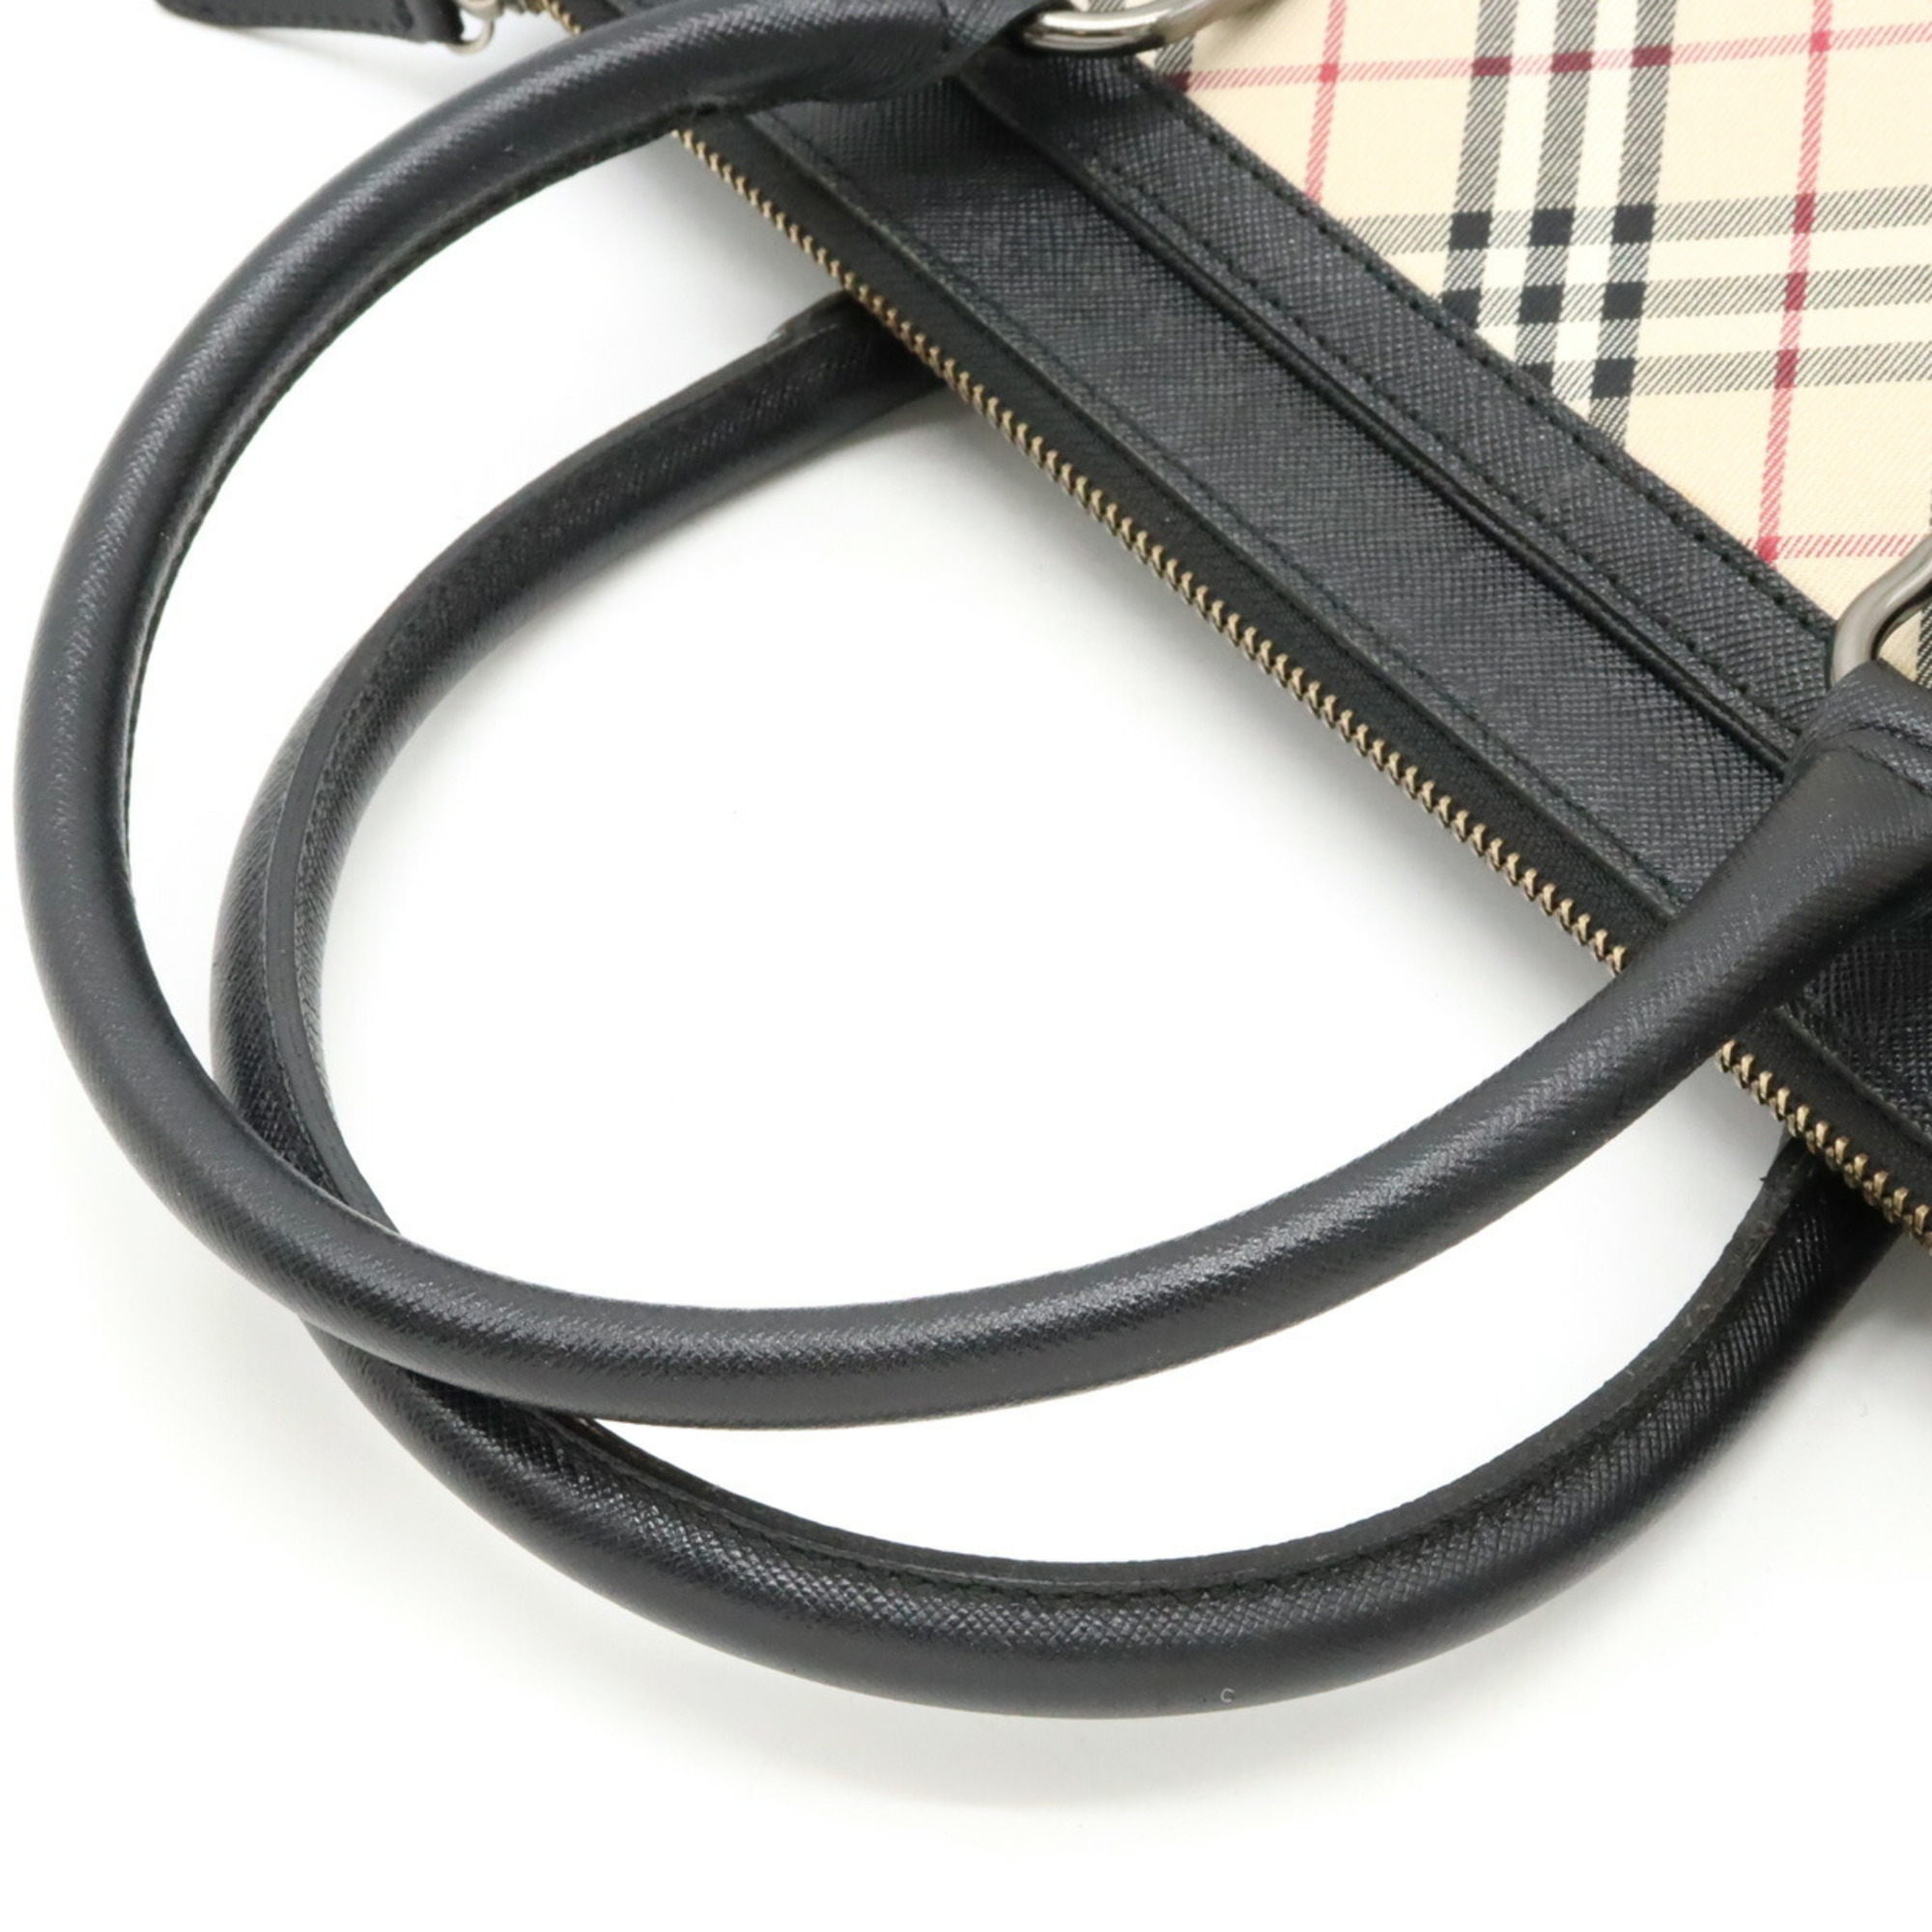 BURBERRY Check pattern tote bag handbag canvas leather beige black